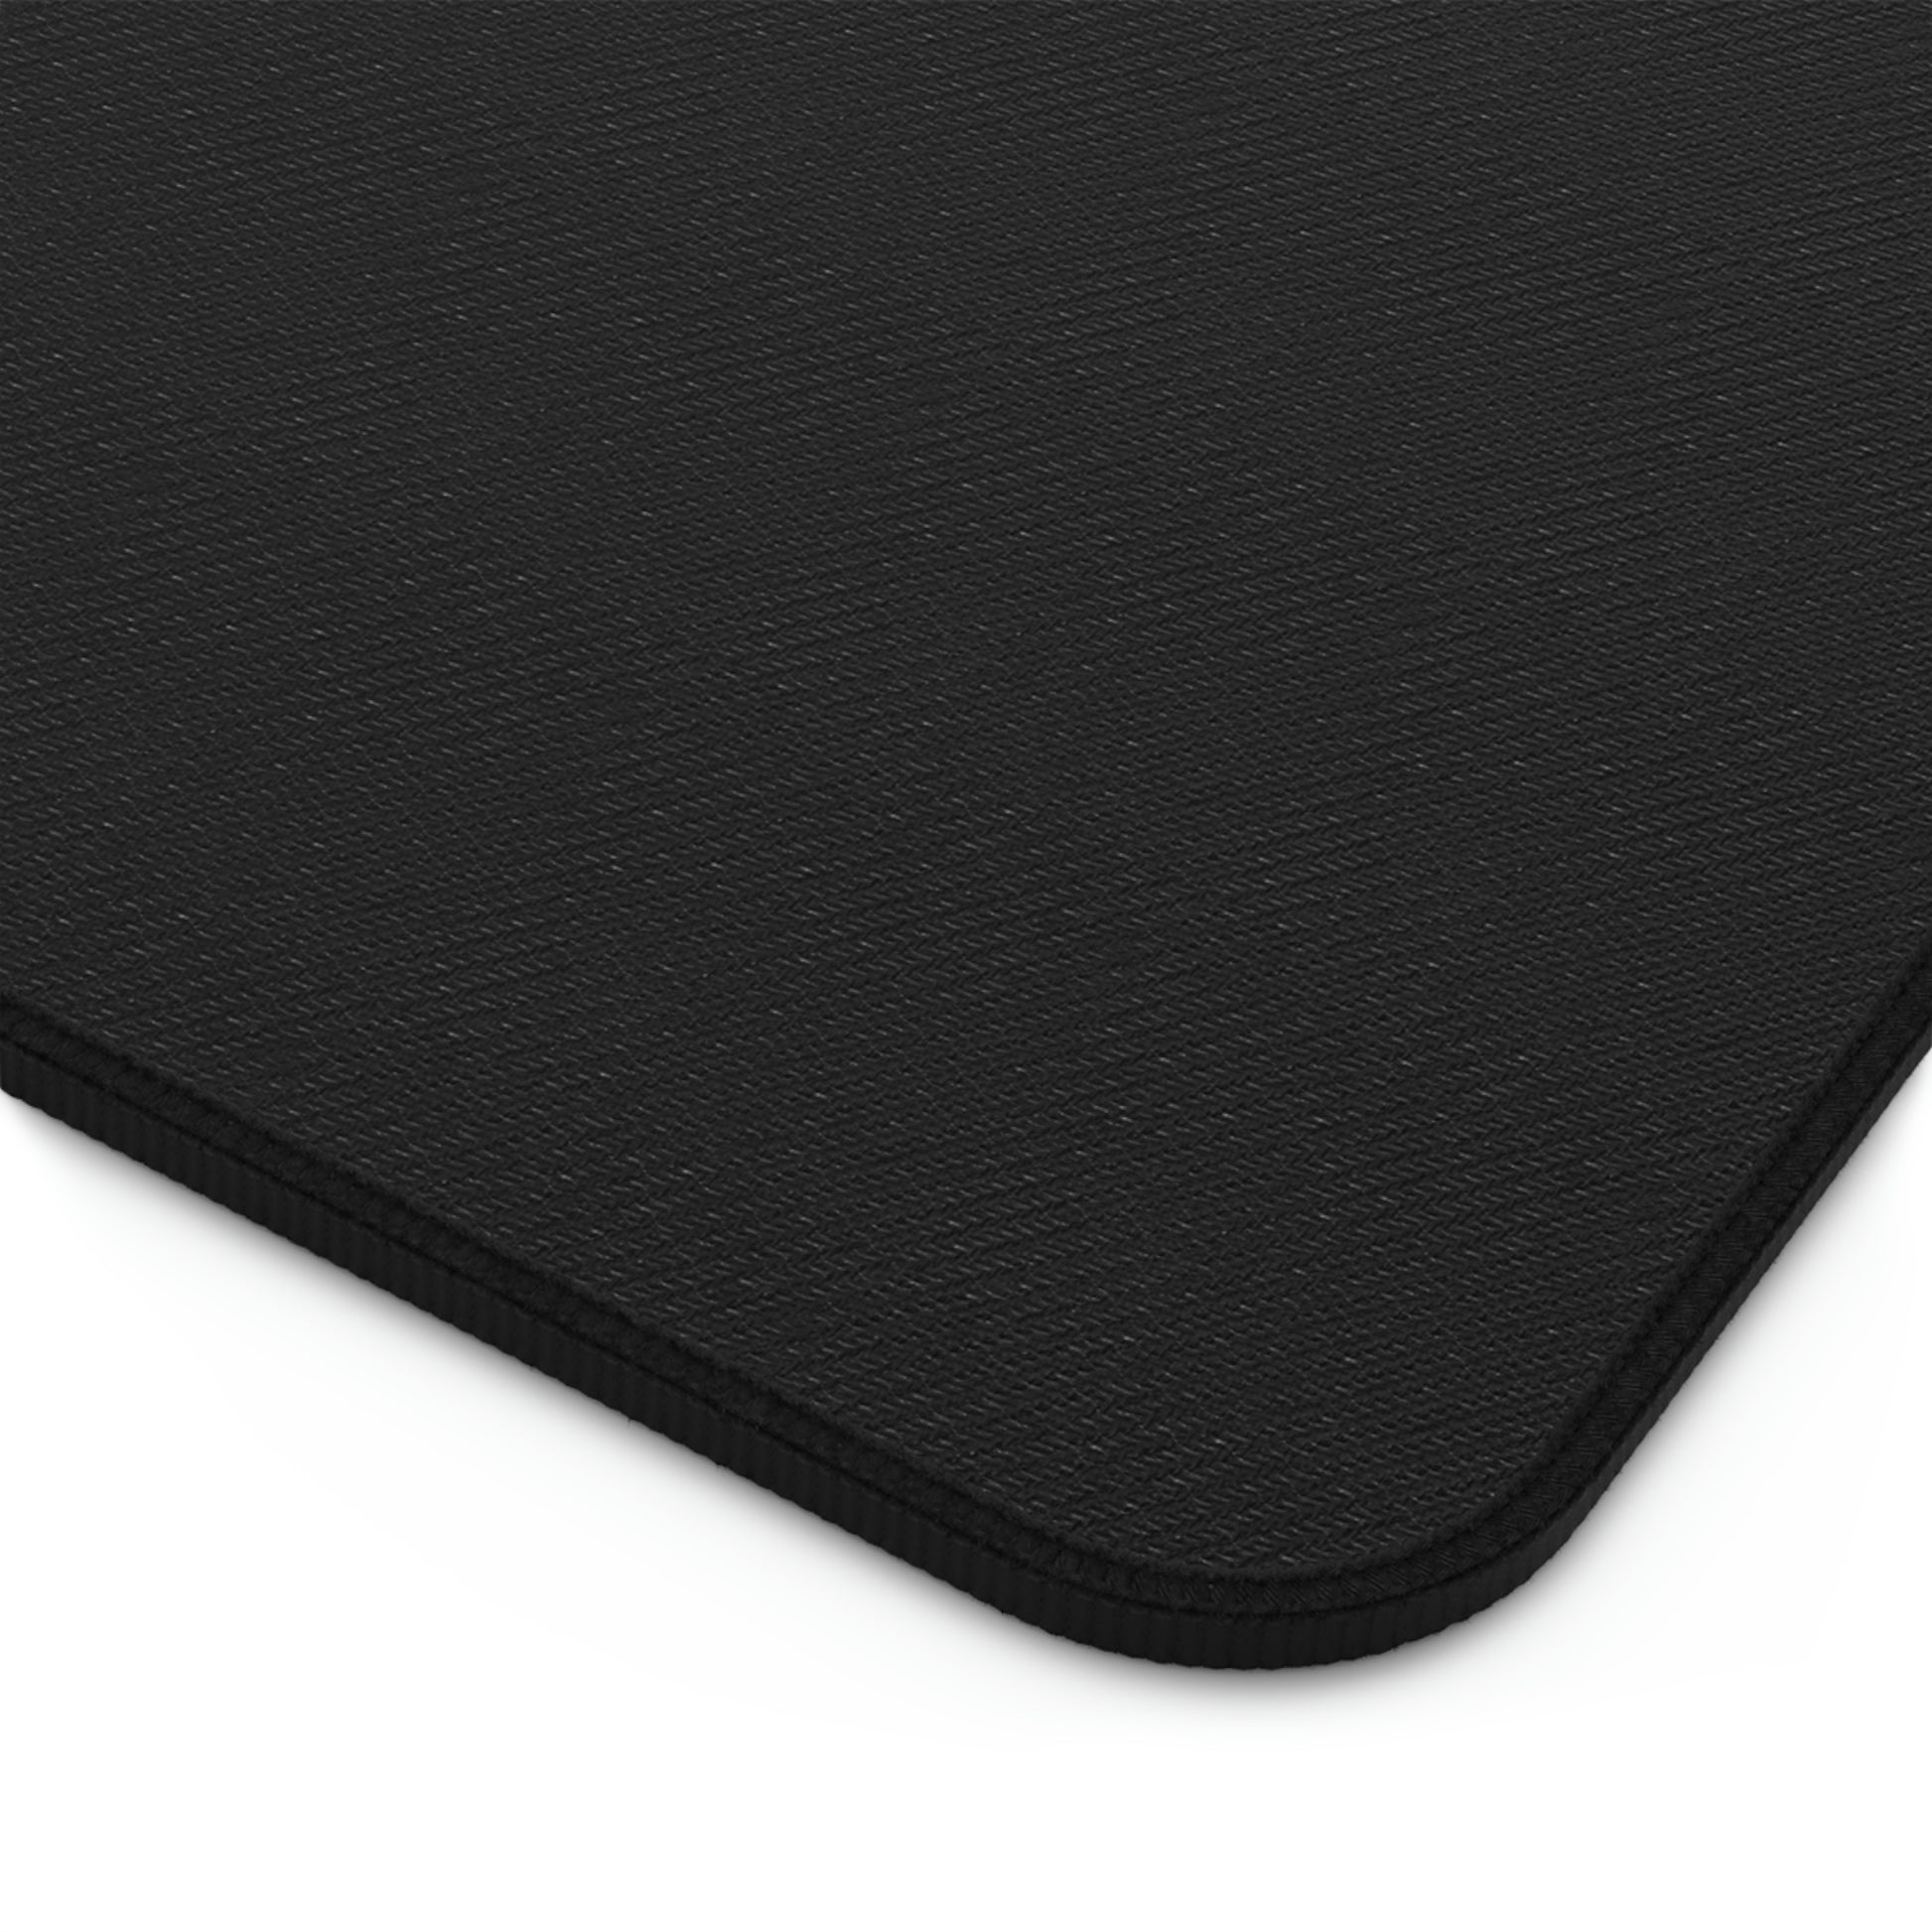 The black rubber bottom of a white topographic desk mat.